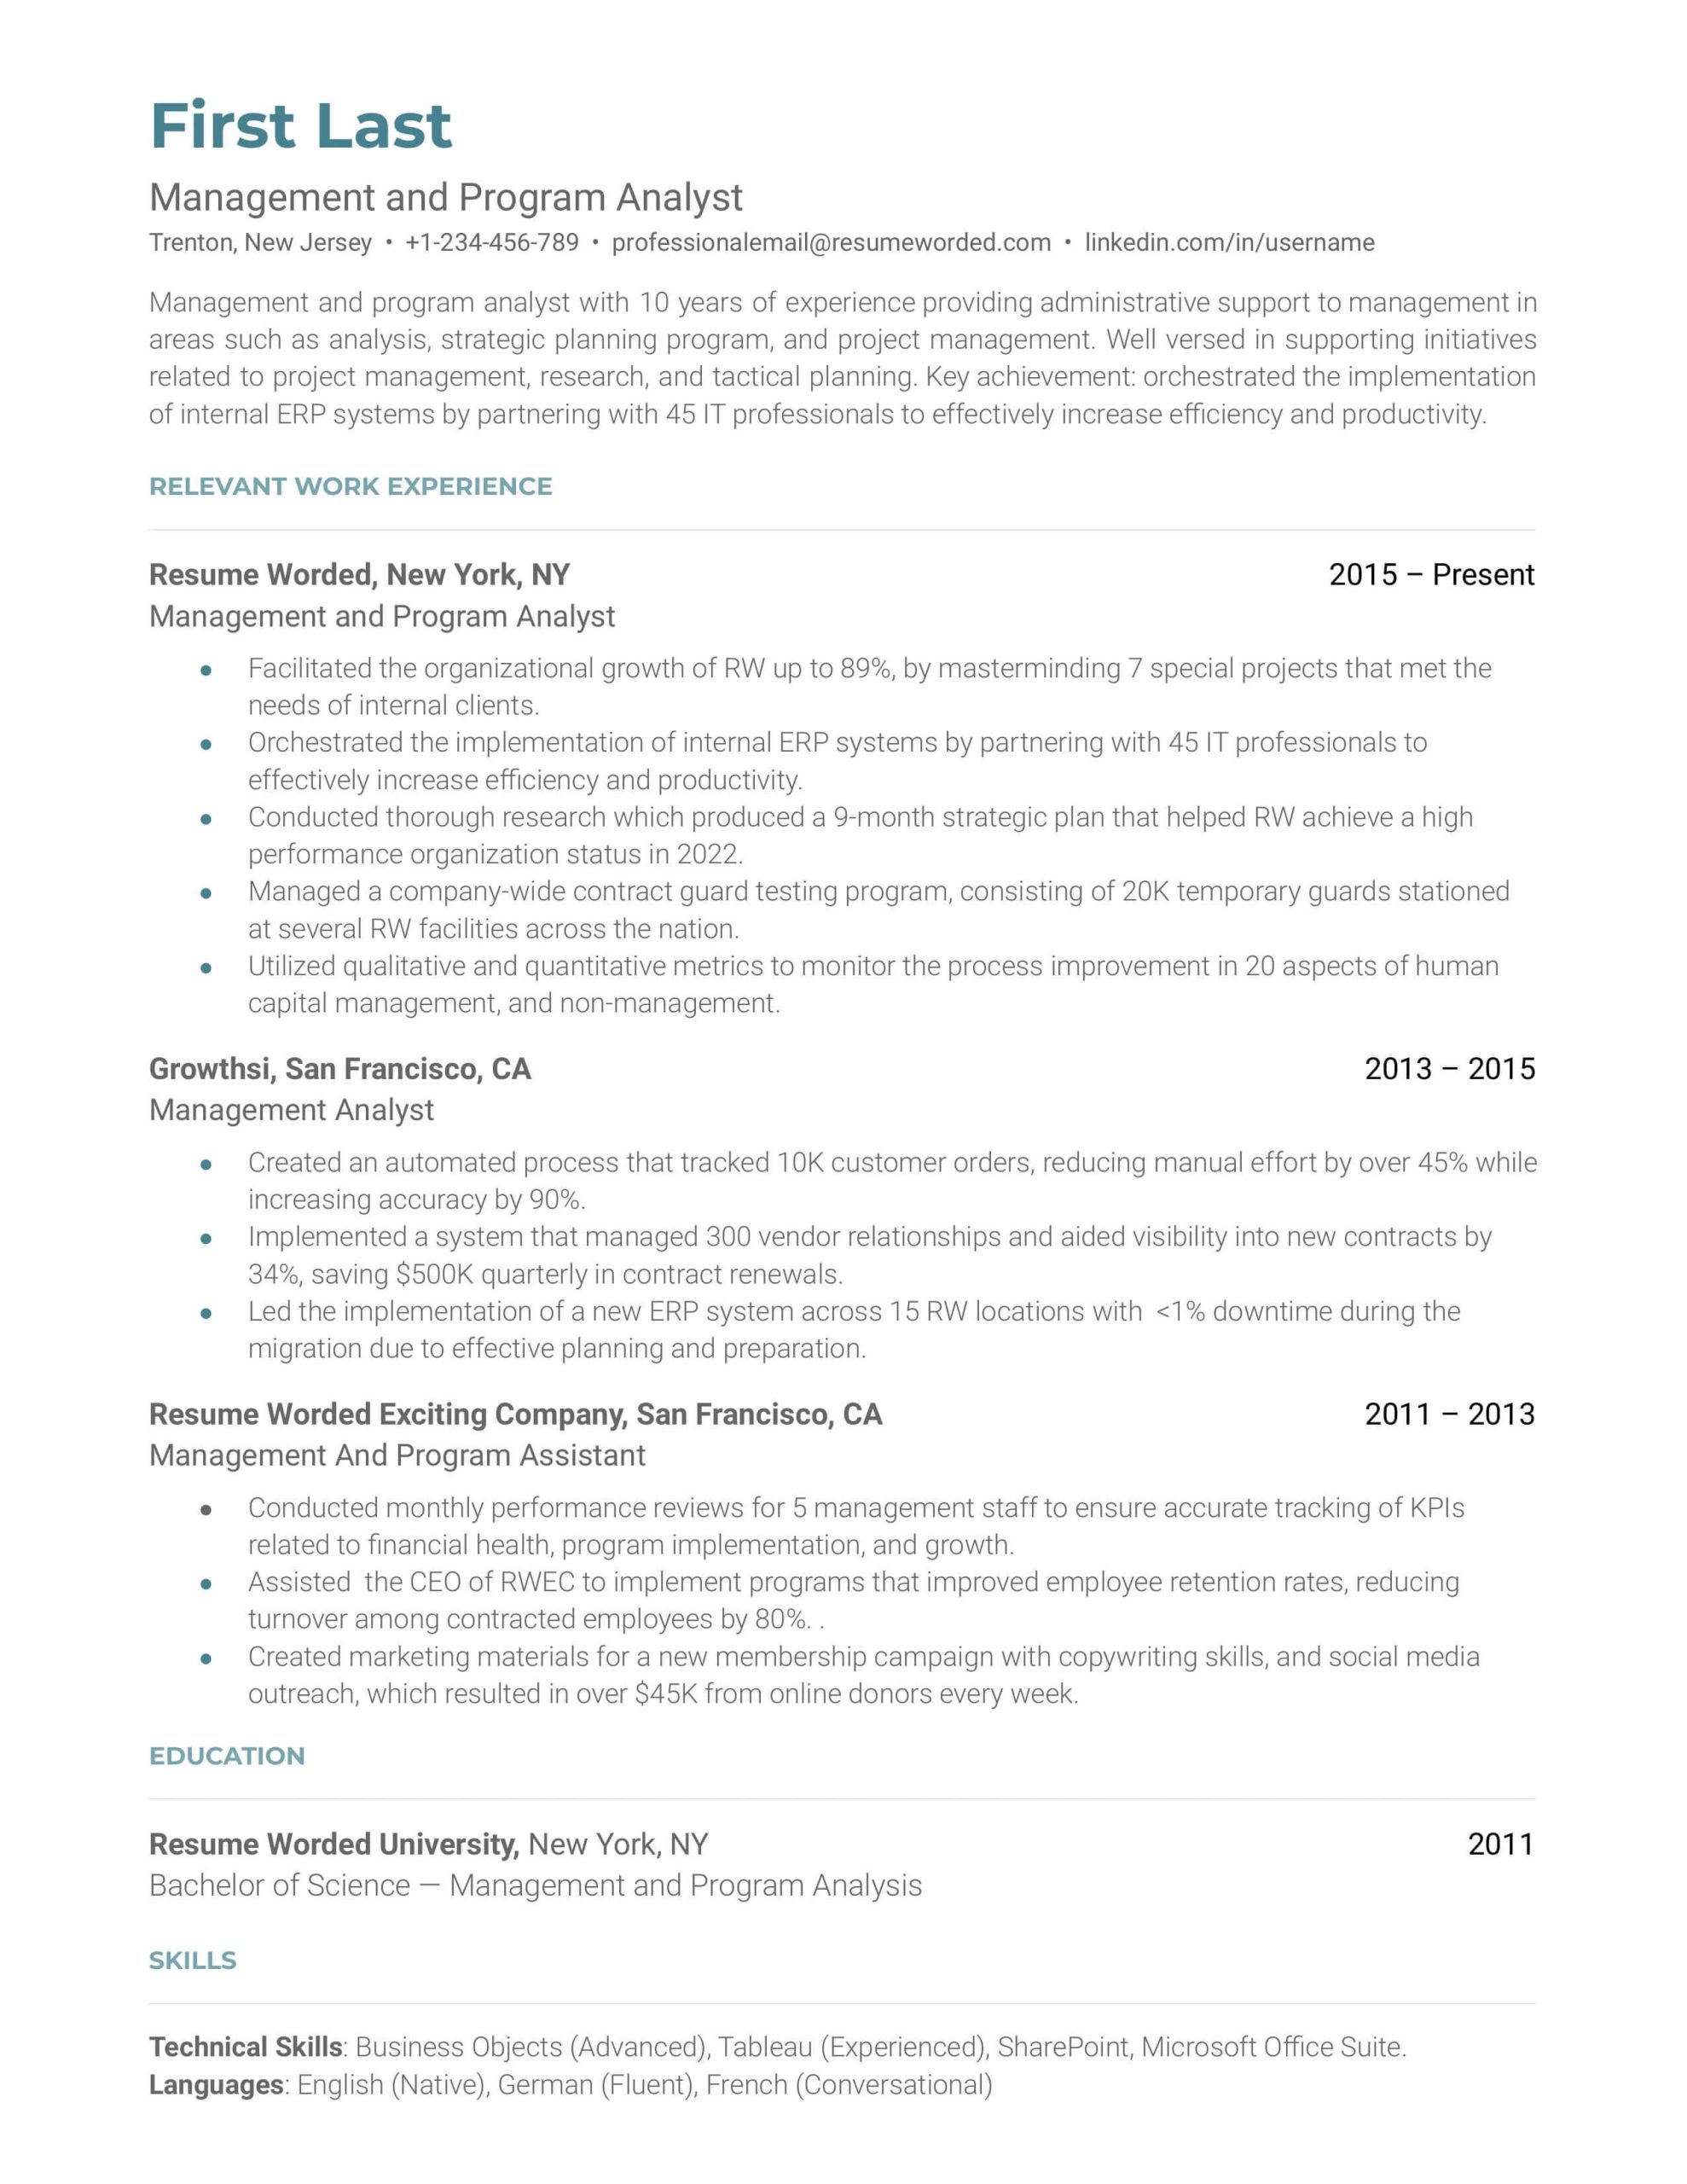 Sample Resume Federal Management and Program Analyst Management and Program Analyst Resume Example for 2022 Resume Worded